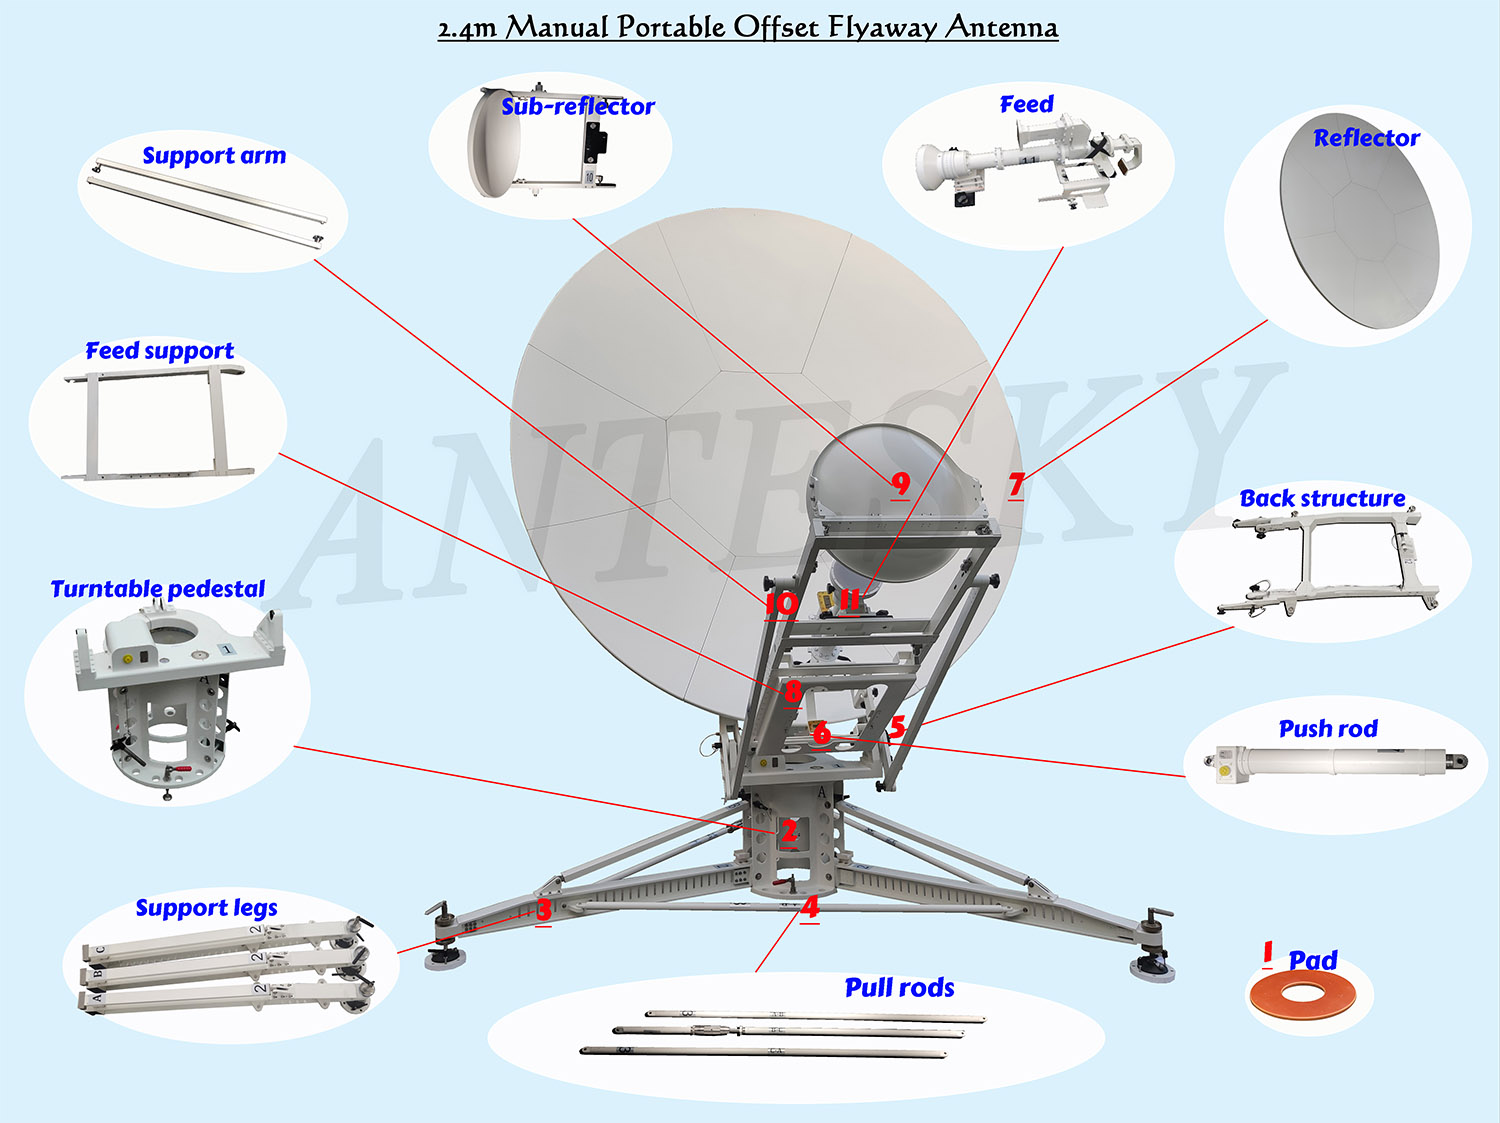 2.4m mannual portable offset flyaway antenna.jpg